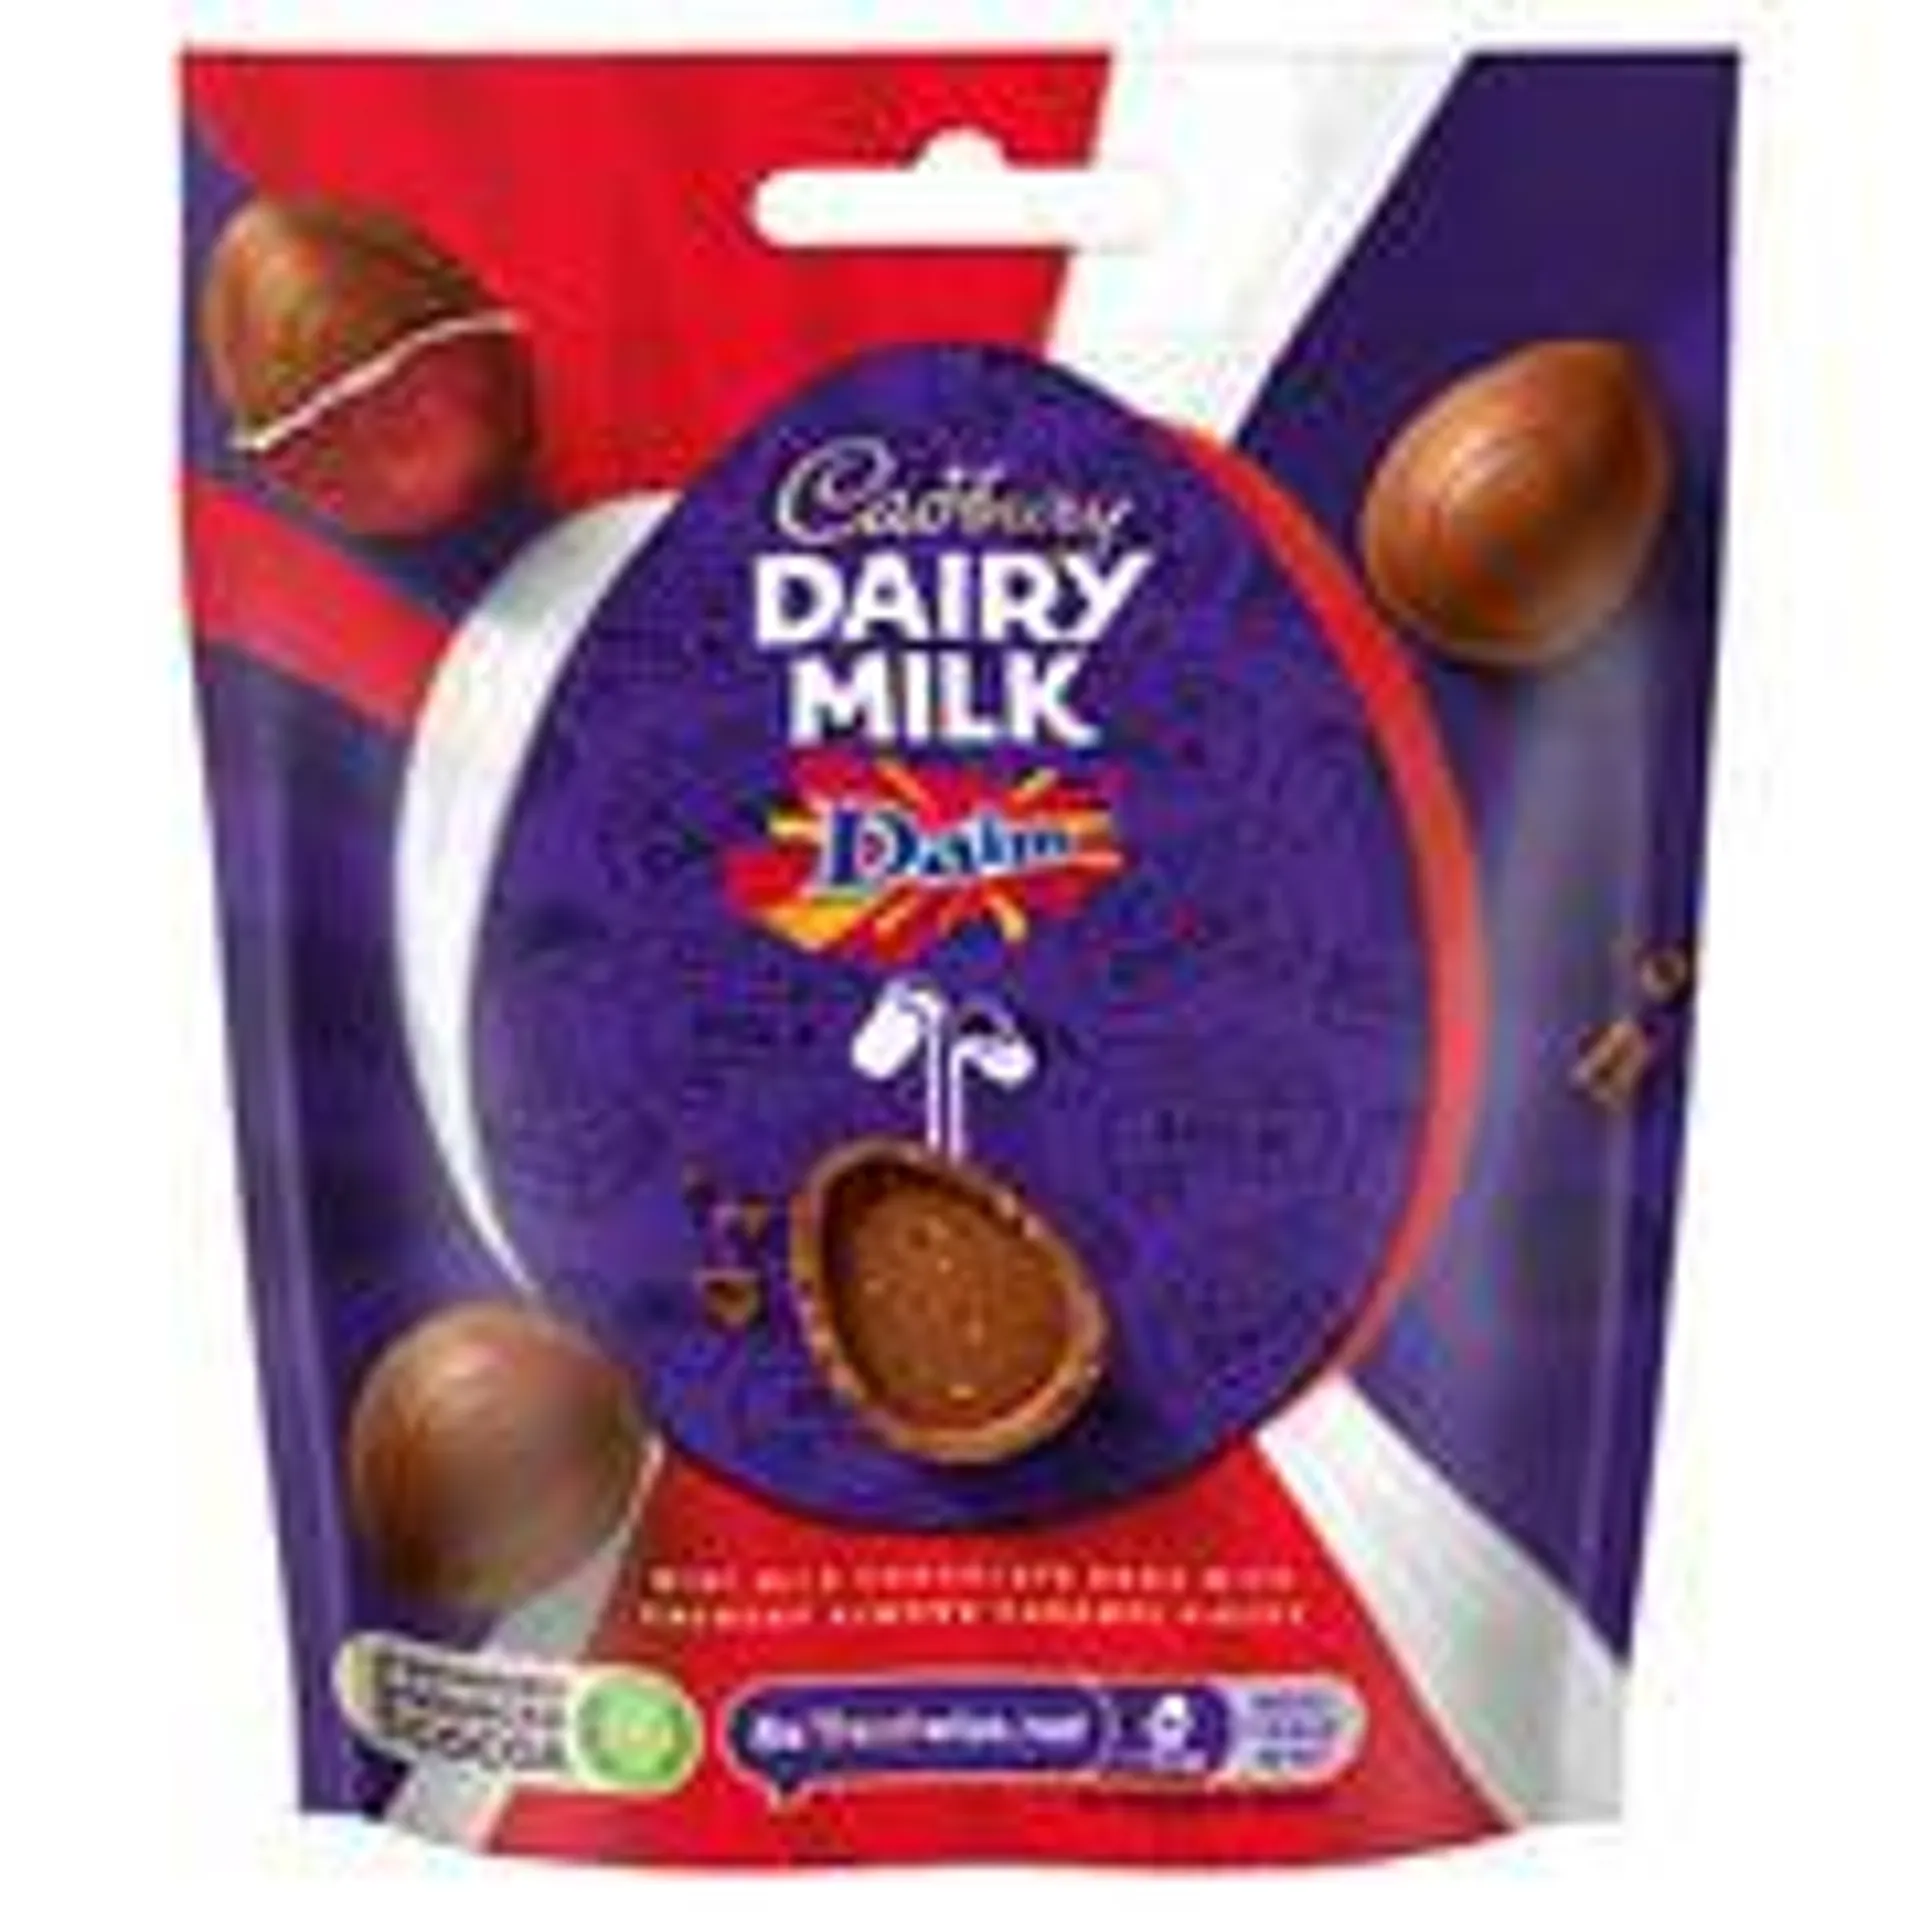 Cadbury Dairy Milk Daim Mini Eggs, 77g